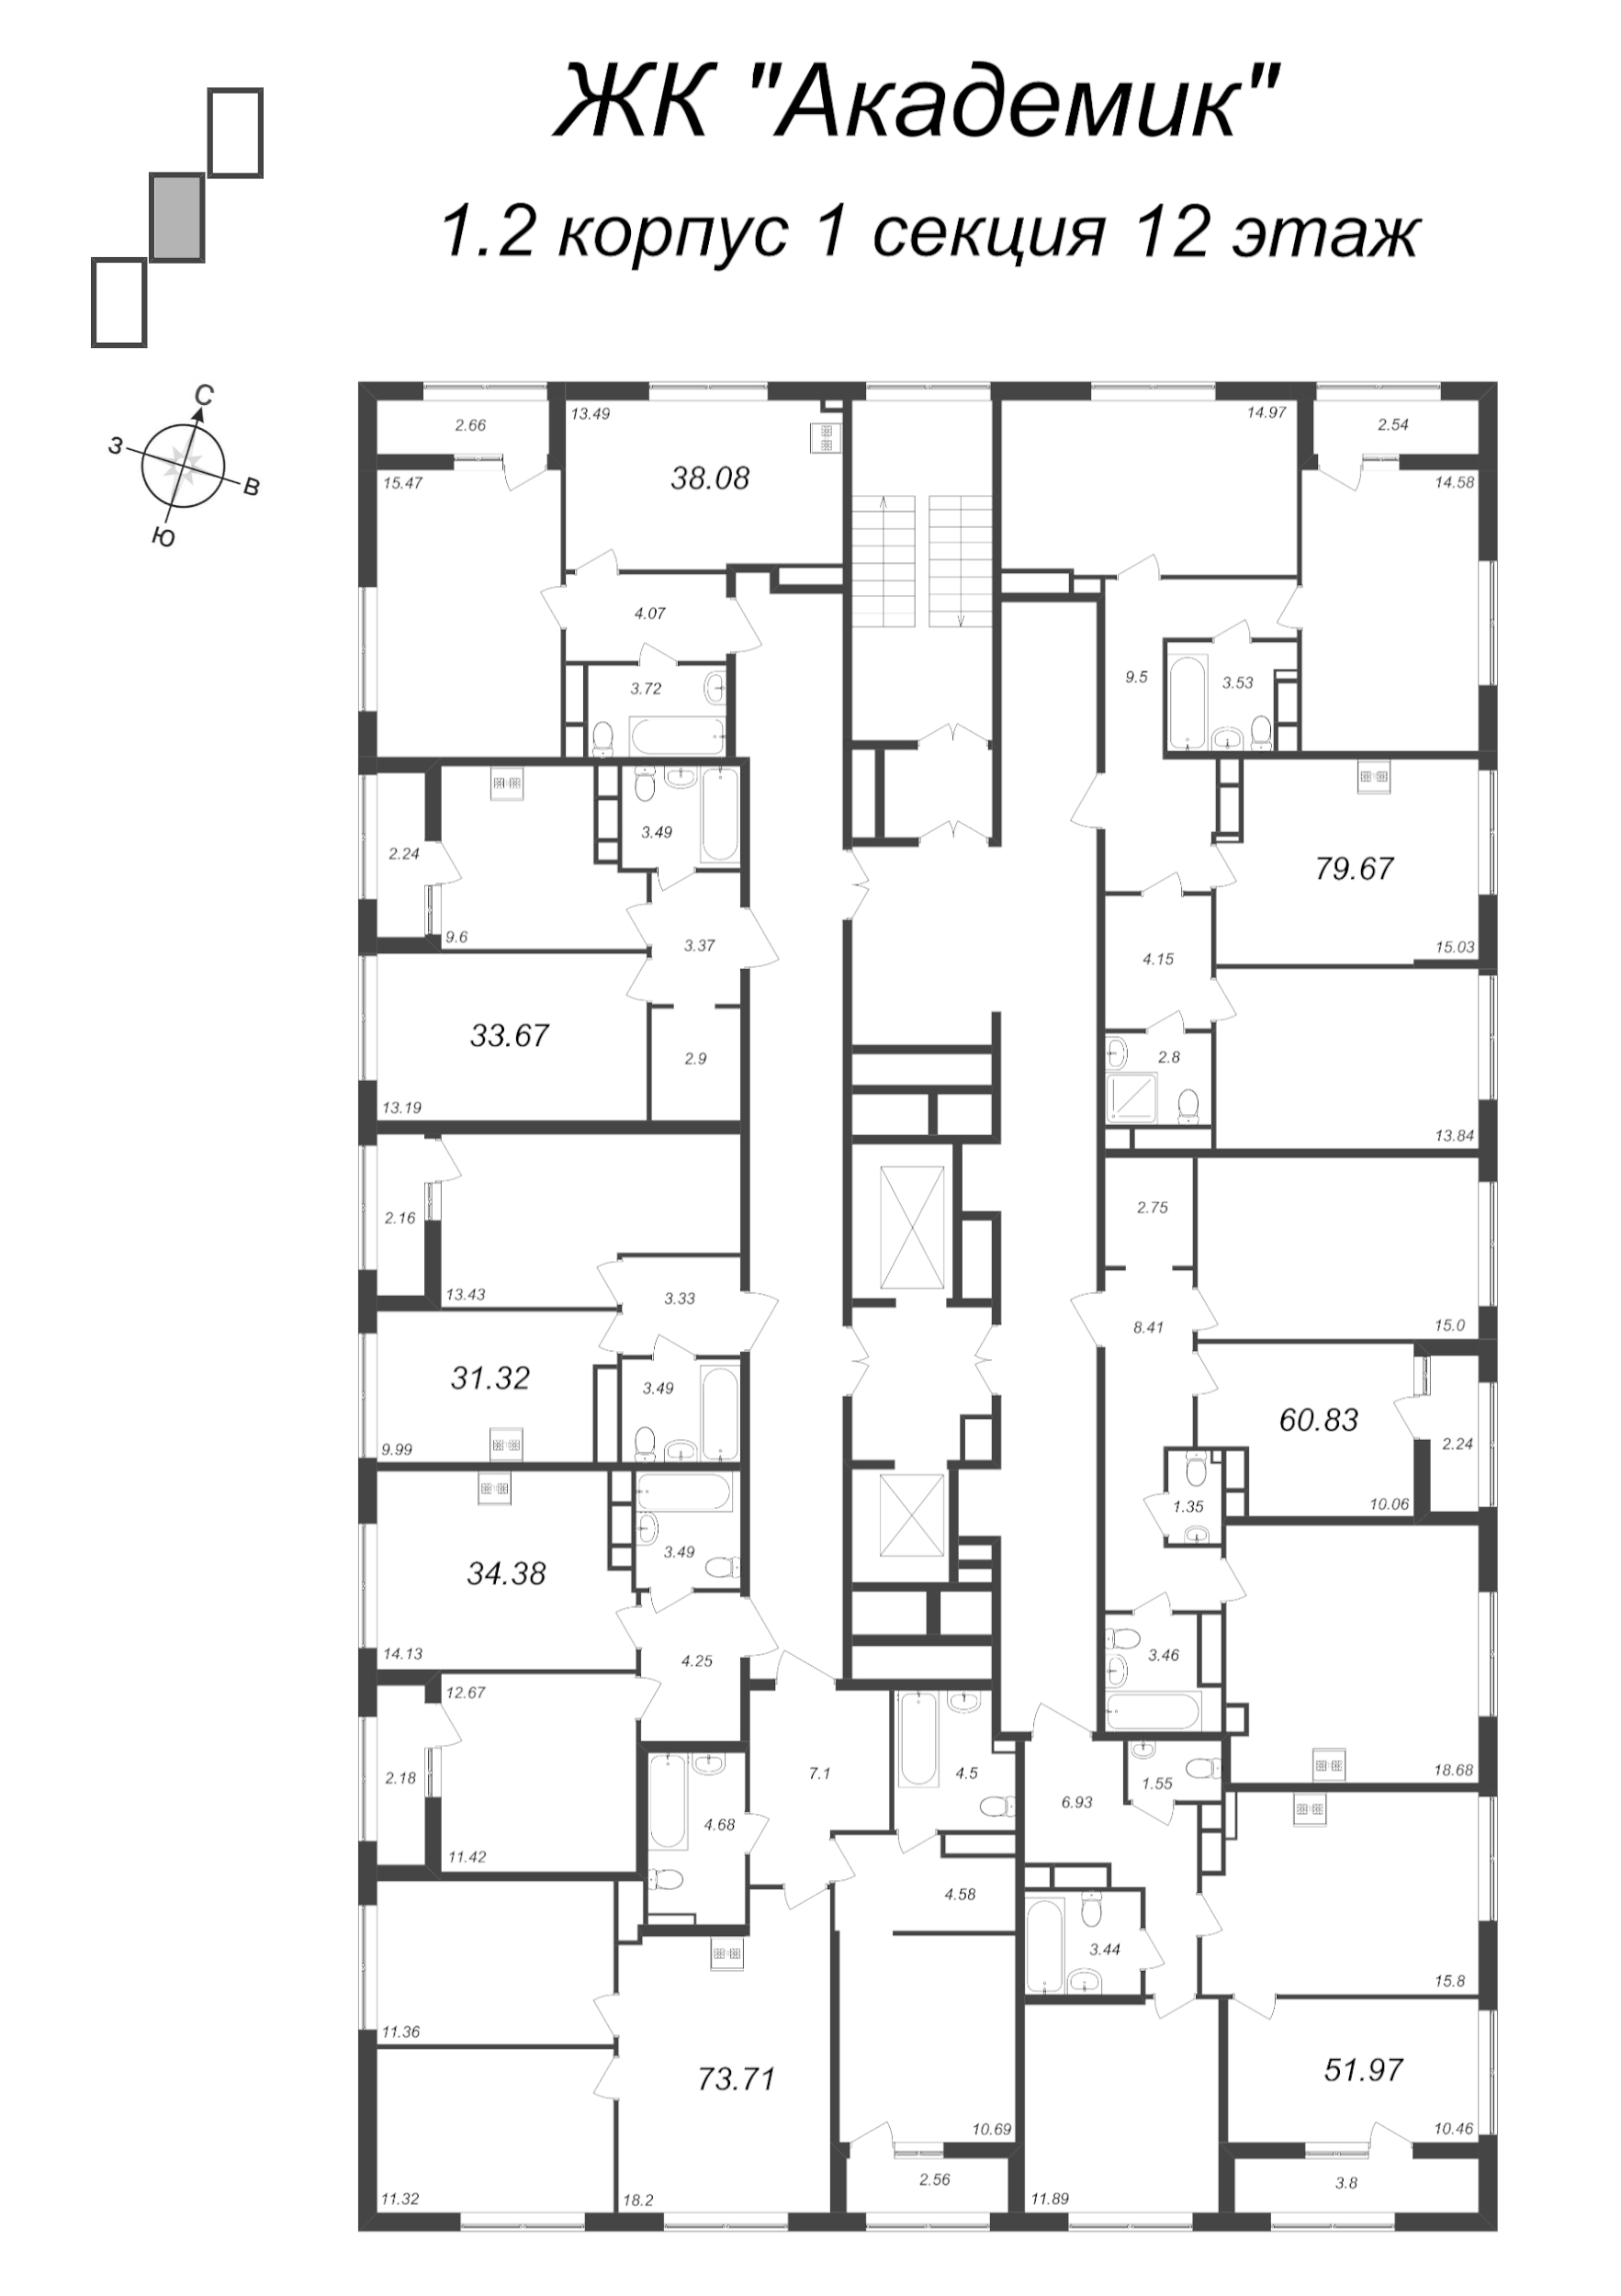 4-комнатная (Евро) квартира, 79.67 м² - планировка этажа